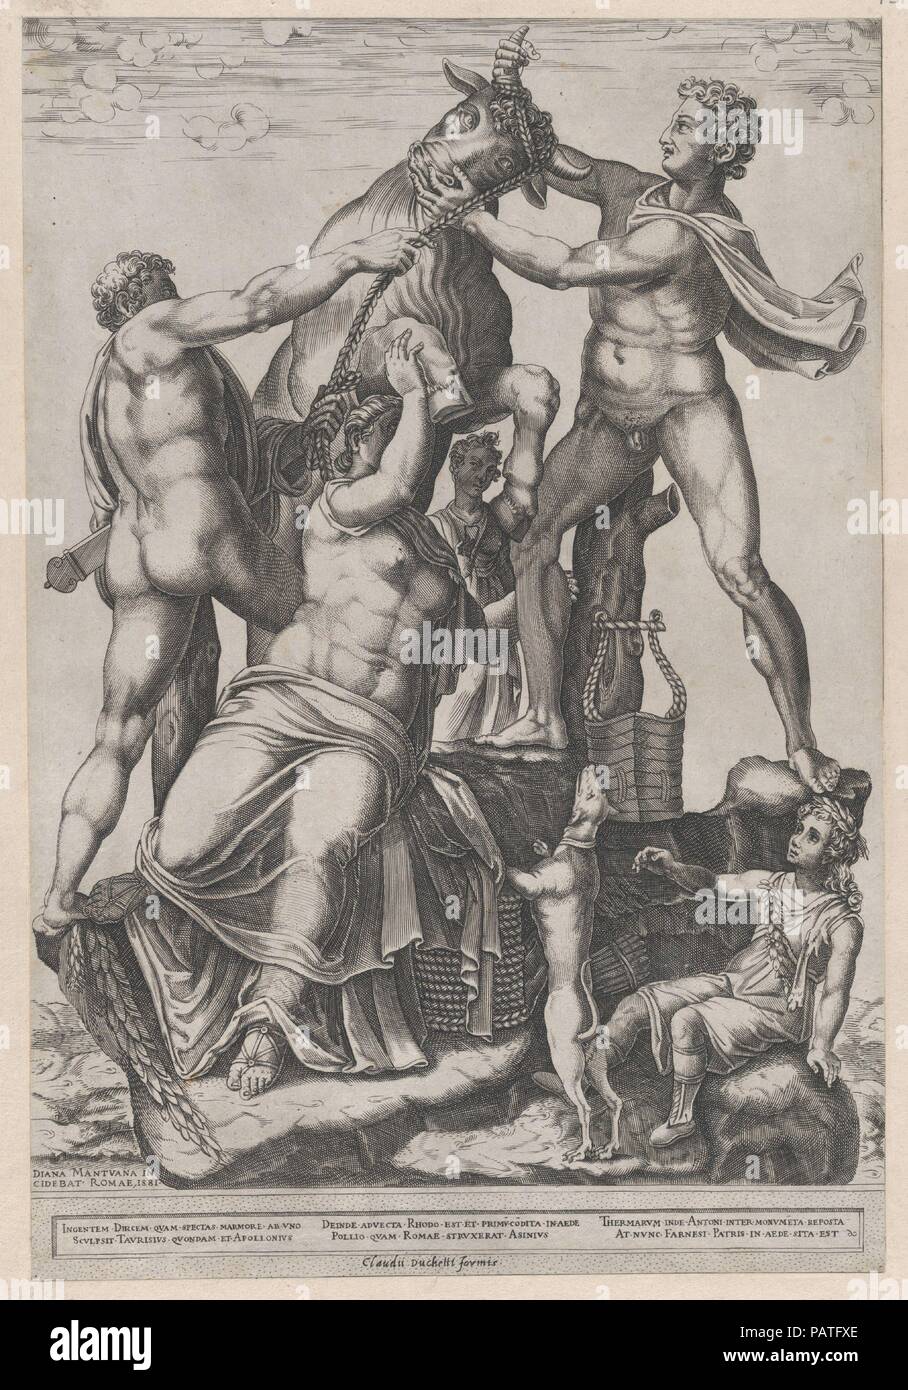 Speculum Romanae Magnificentiae: Amphion and Zethus Tying Dirce to a Wild Bull [The Farnese Bull]. Artist: Diana Scultori (Italian, Mantua ca. 1535?-after 1588 Rome). Dimensions: sheet: 18 1/8 x 13 9/16 in. (46 x 34.4 cm)  mount: 15 1/2 x 10 1/2 in. (39.4 x 26.6 cm). Publisher: Claudio Duchetti (Italian, active Venice and Rome, ca. 1565-died ca. 1585). Series/Portfolio: Speculum Romanae Magnificentiae. Date: 1581.  This print comes from the museum's copy of the Speculum Romanae Magnificentiae (The Mirror of Roman Magnificence) The Speculum found its origin in the publishing endeavors of Antoni Stock Photo